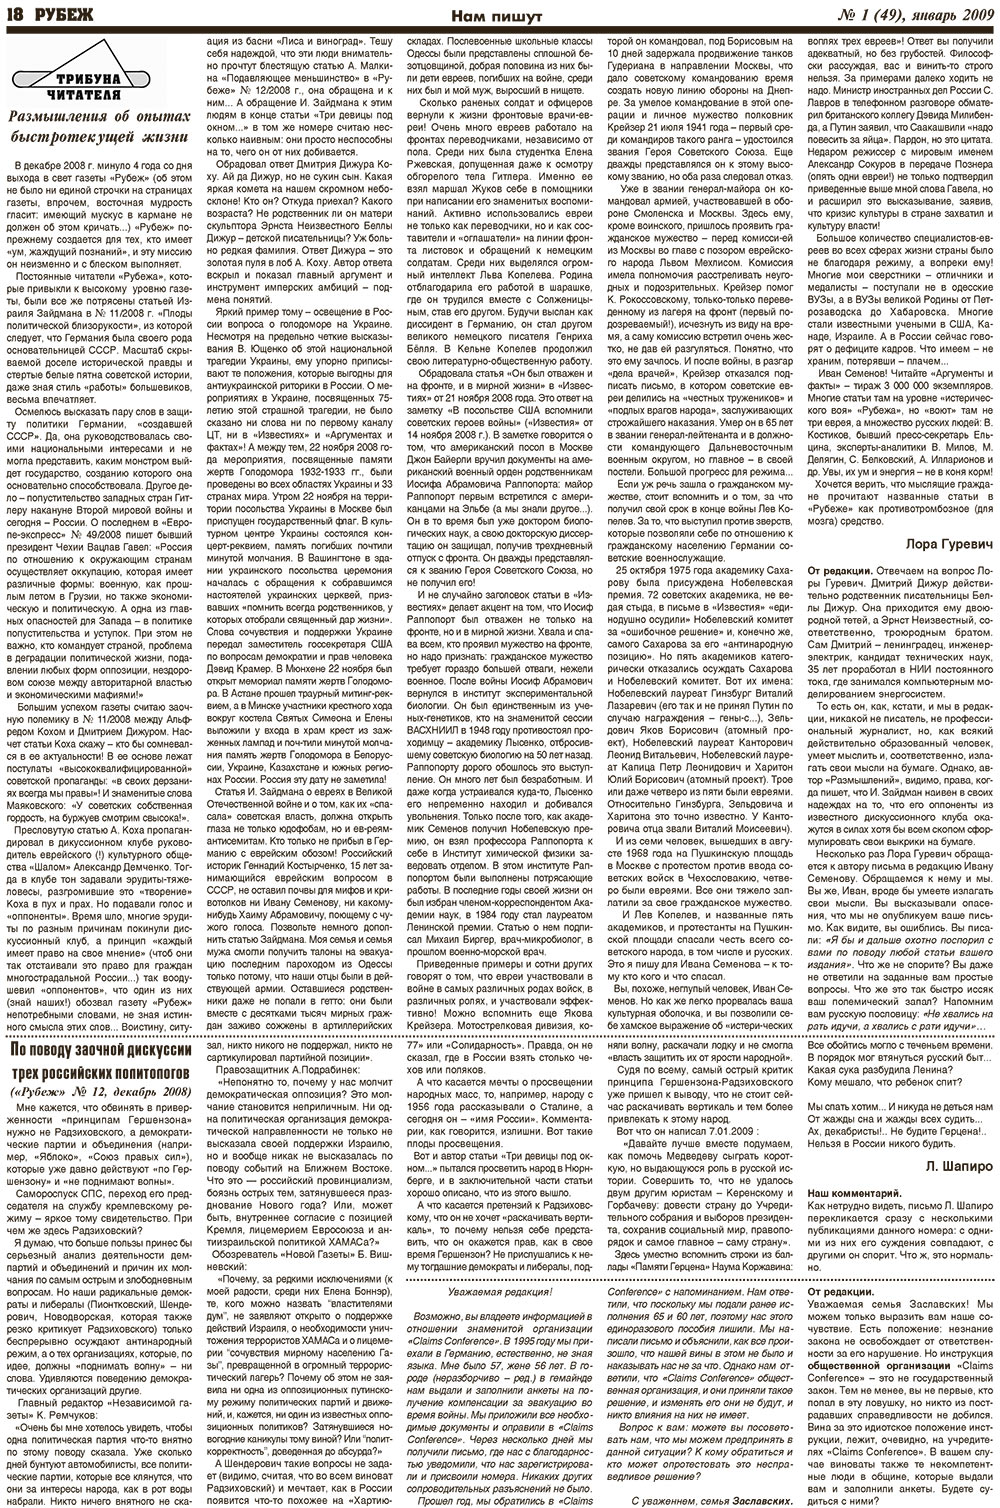 Рубеж, газета. 2009 №1 стр.18